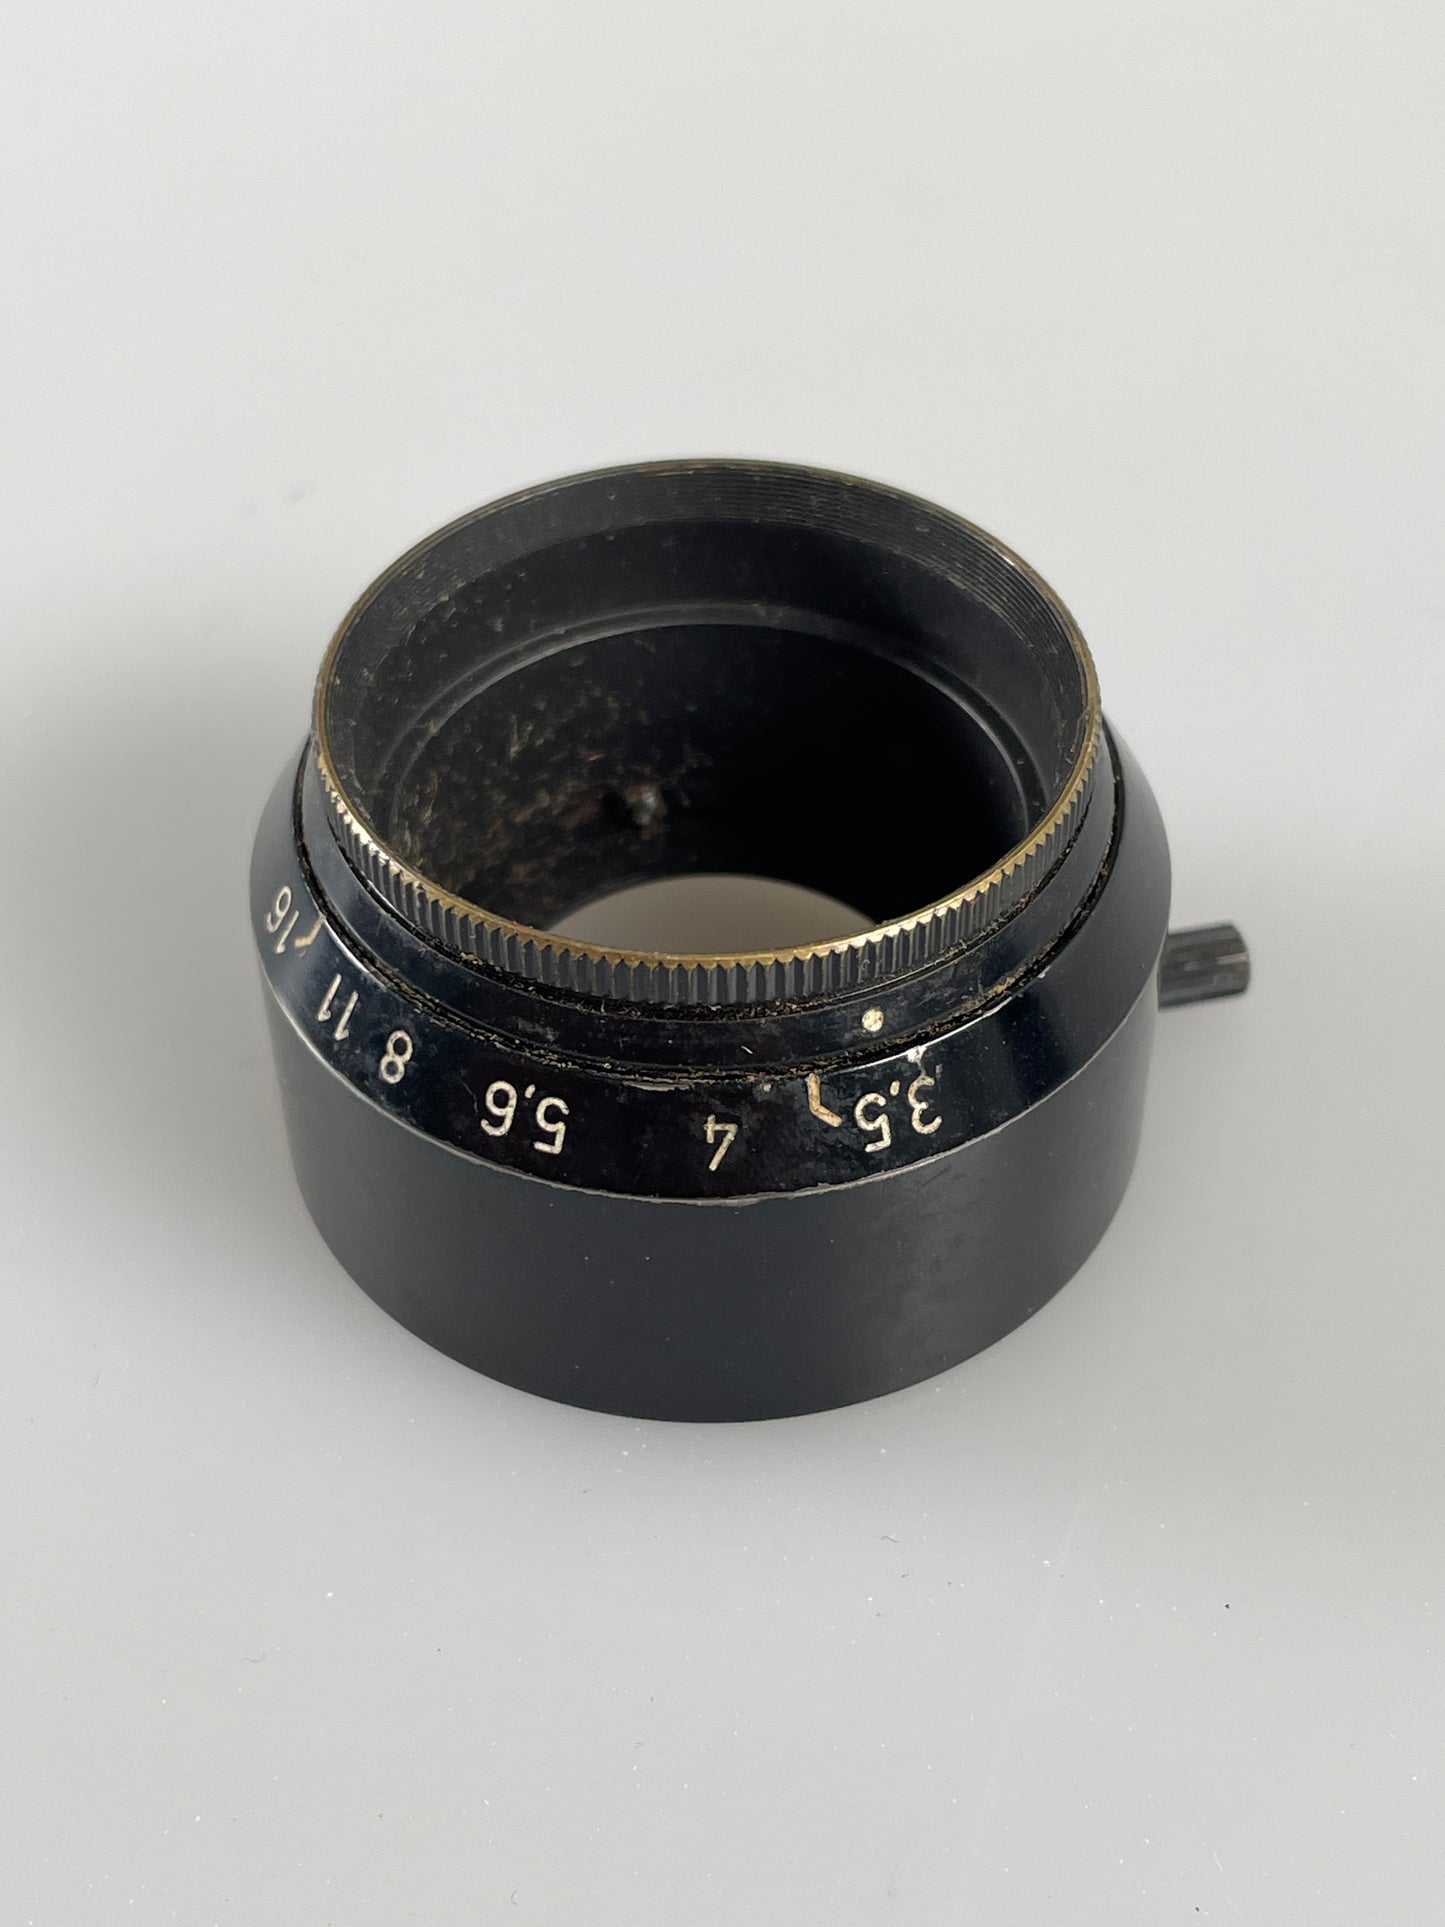 Leitz Wetzlar VALOO Lens Hood w/ Aperture Control for 5cm Elmar